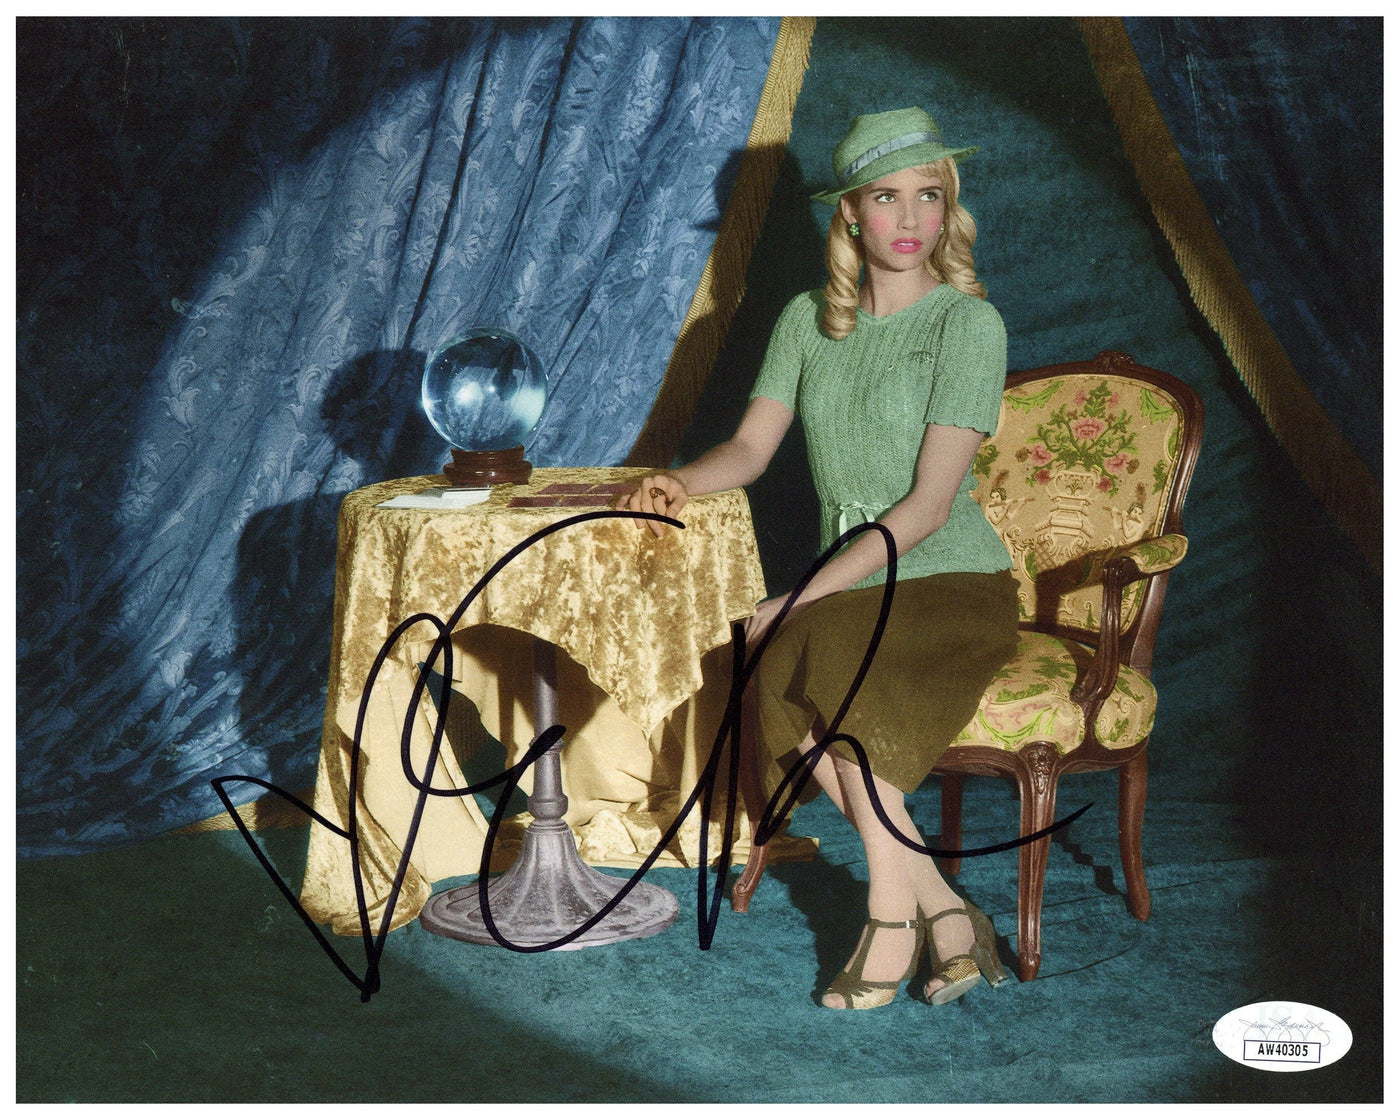 Emma Roberts Signed 8x10 Photo American Horror Story Autographed JSA COA #4